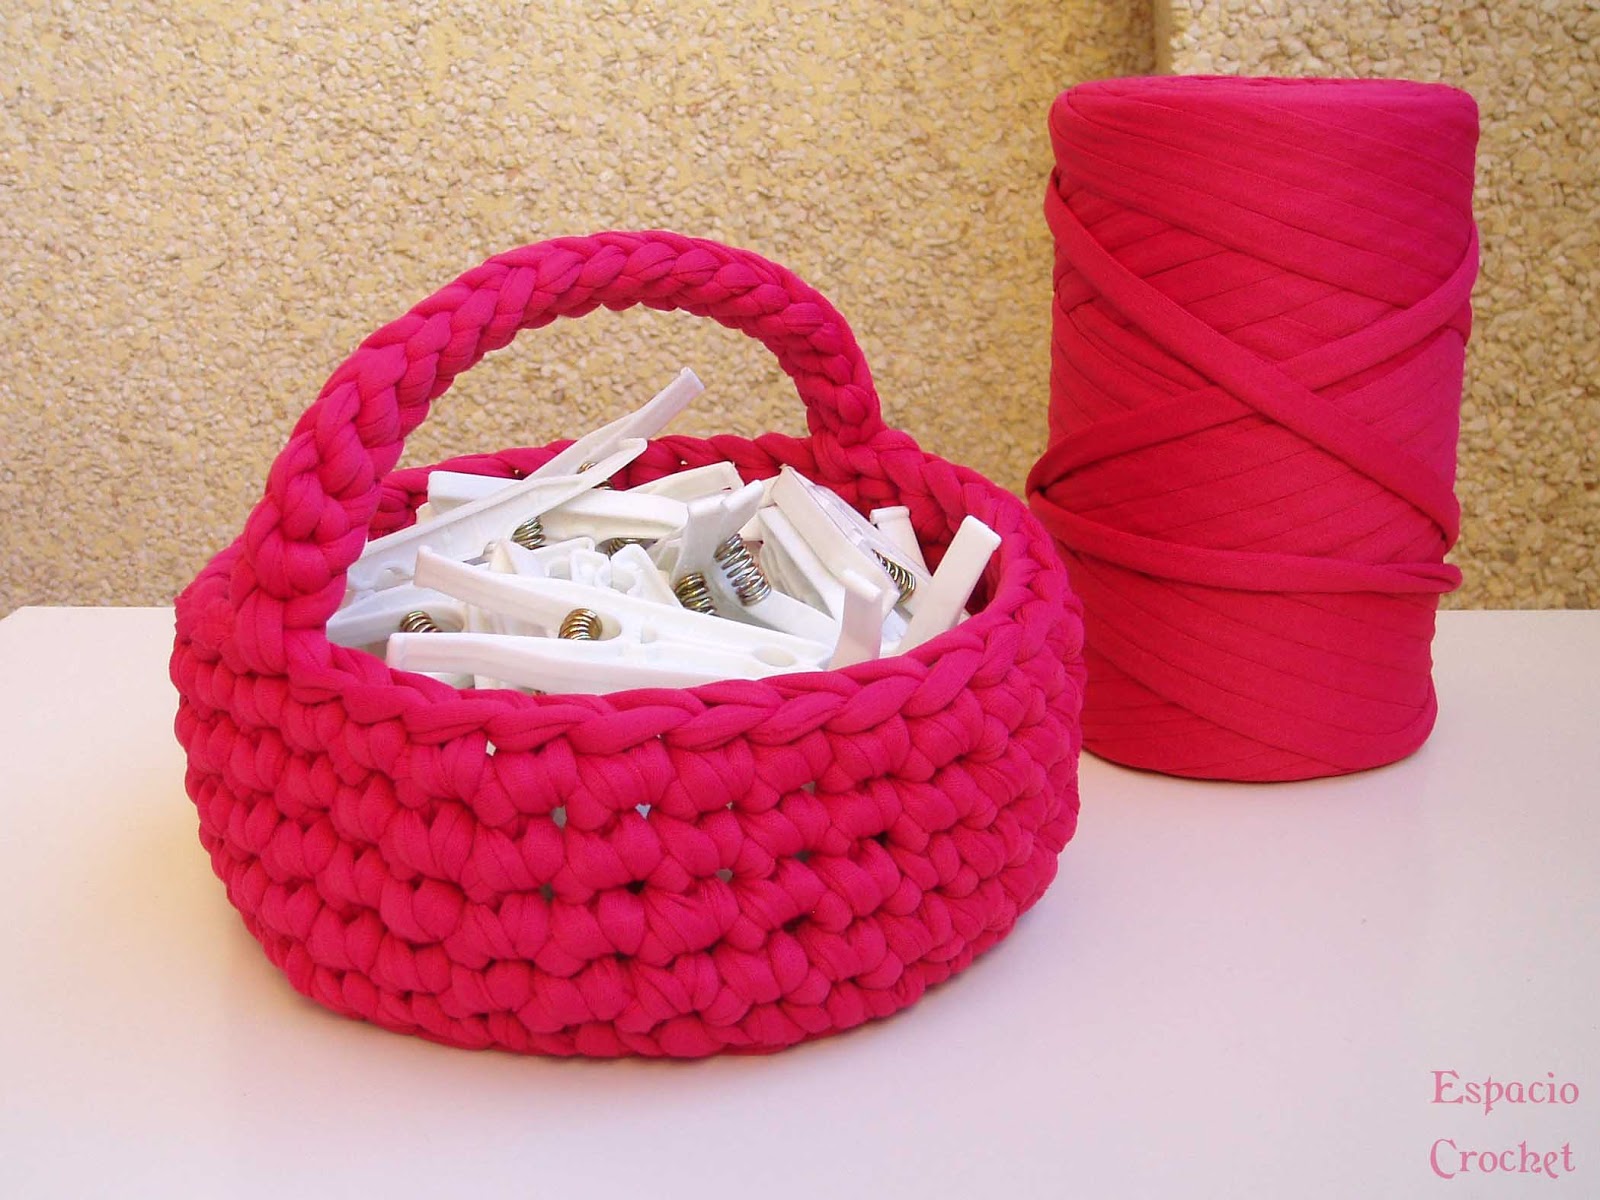 Espacio Crochet: Cesto para pinzas